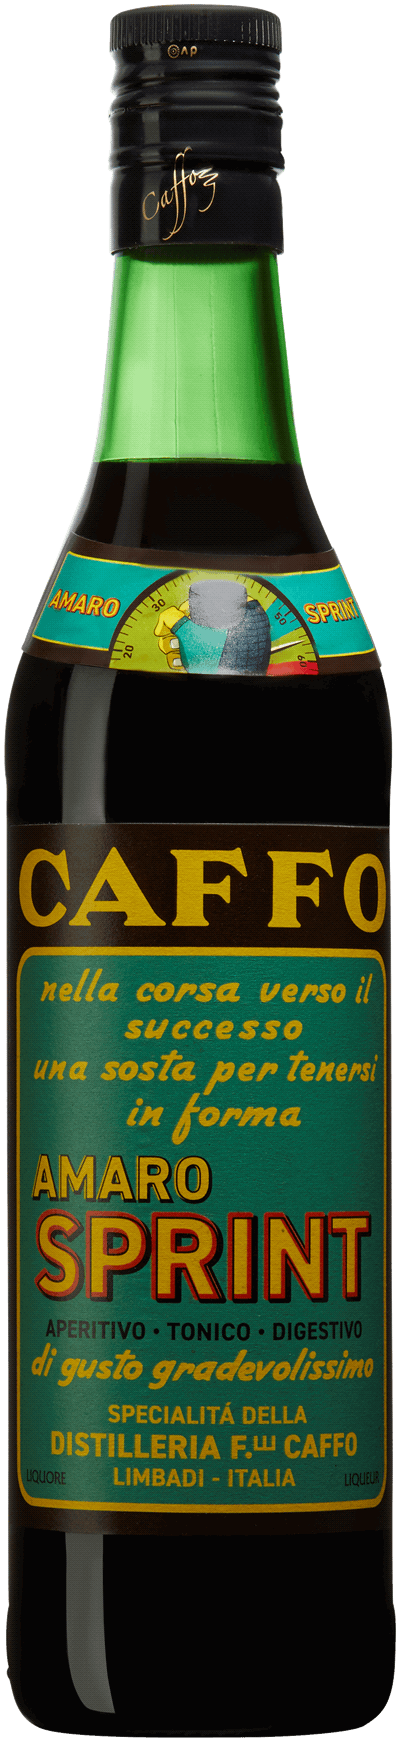 Caffo Amaro Sprint